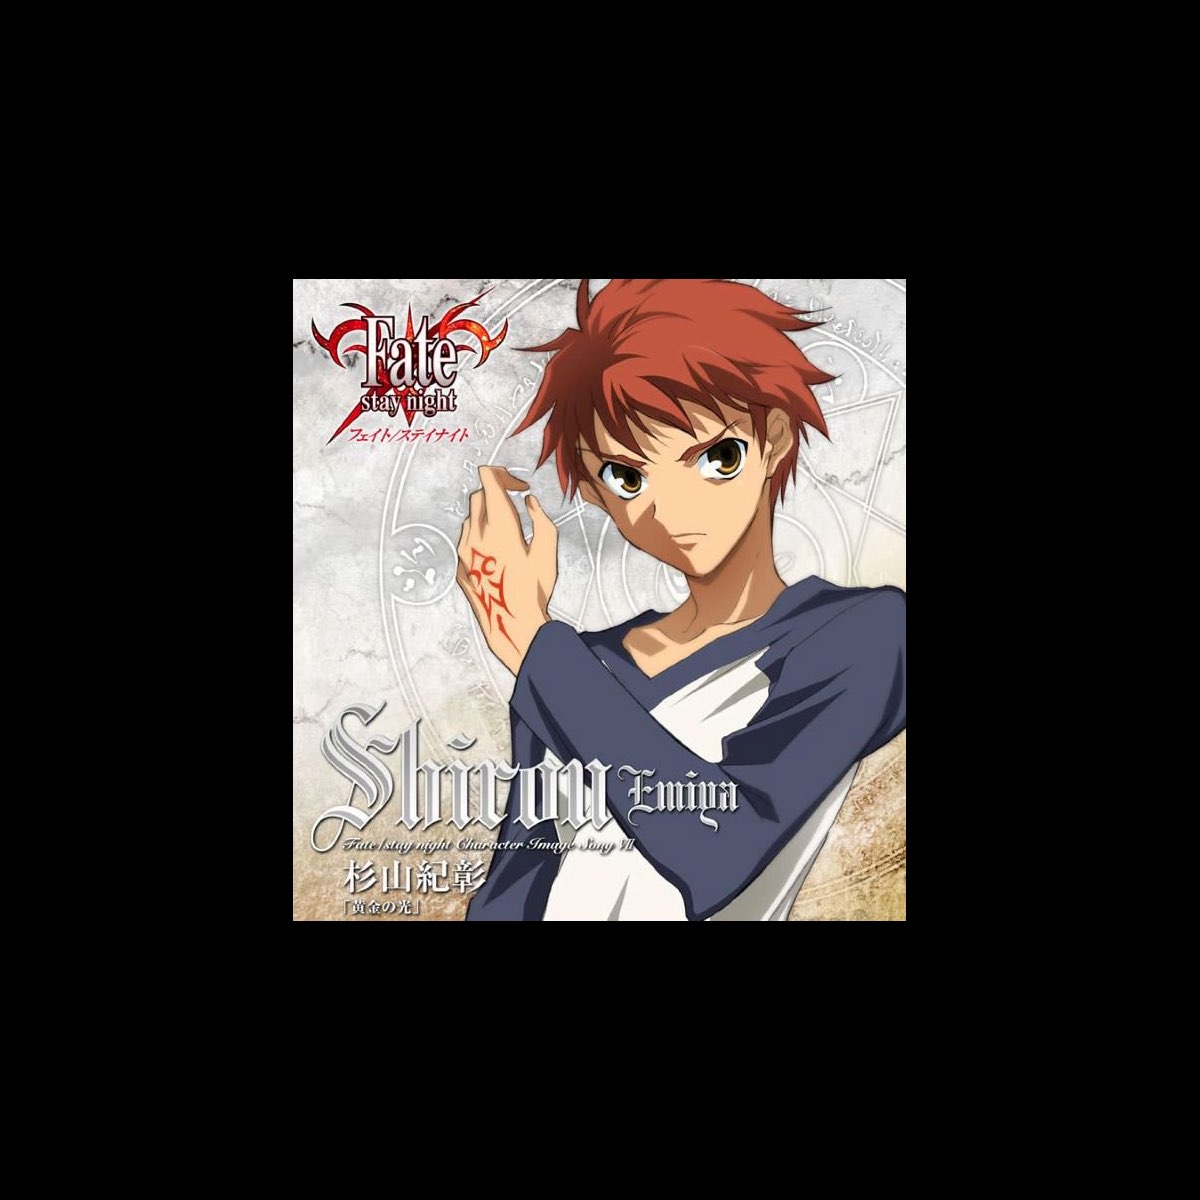 Fate Stay Night Character Image Song 7 Shiro Emiya Ep By Noriaki Sugiyama On Apple Music